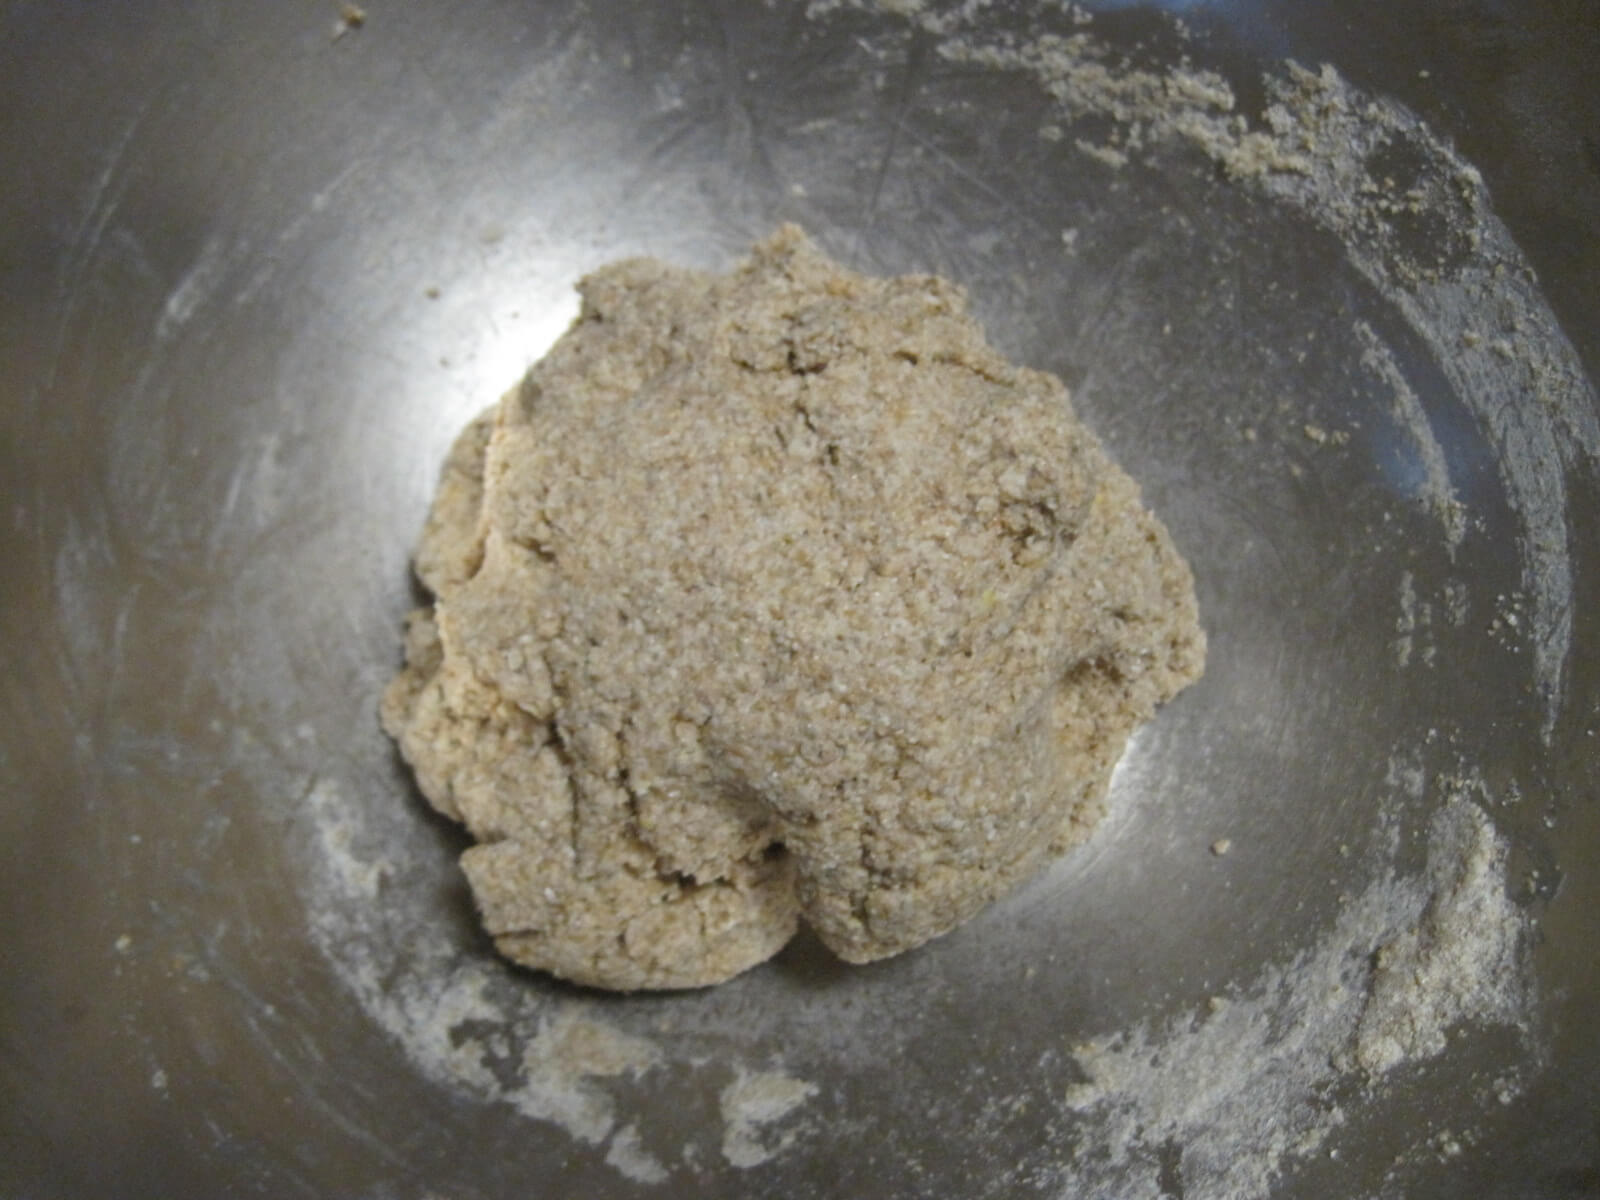 kneaded dough ball